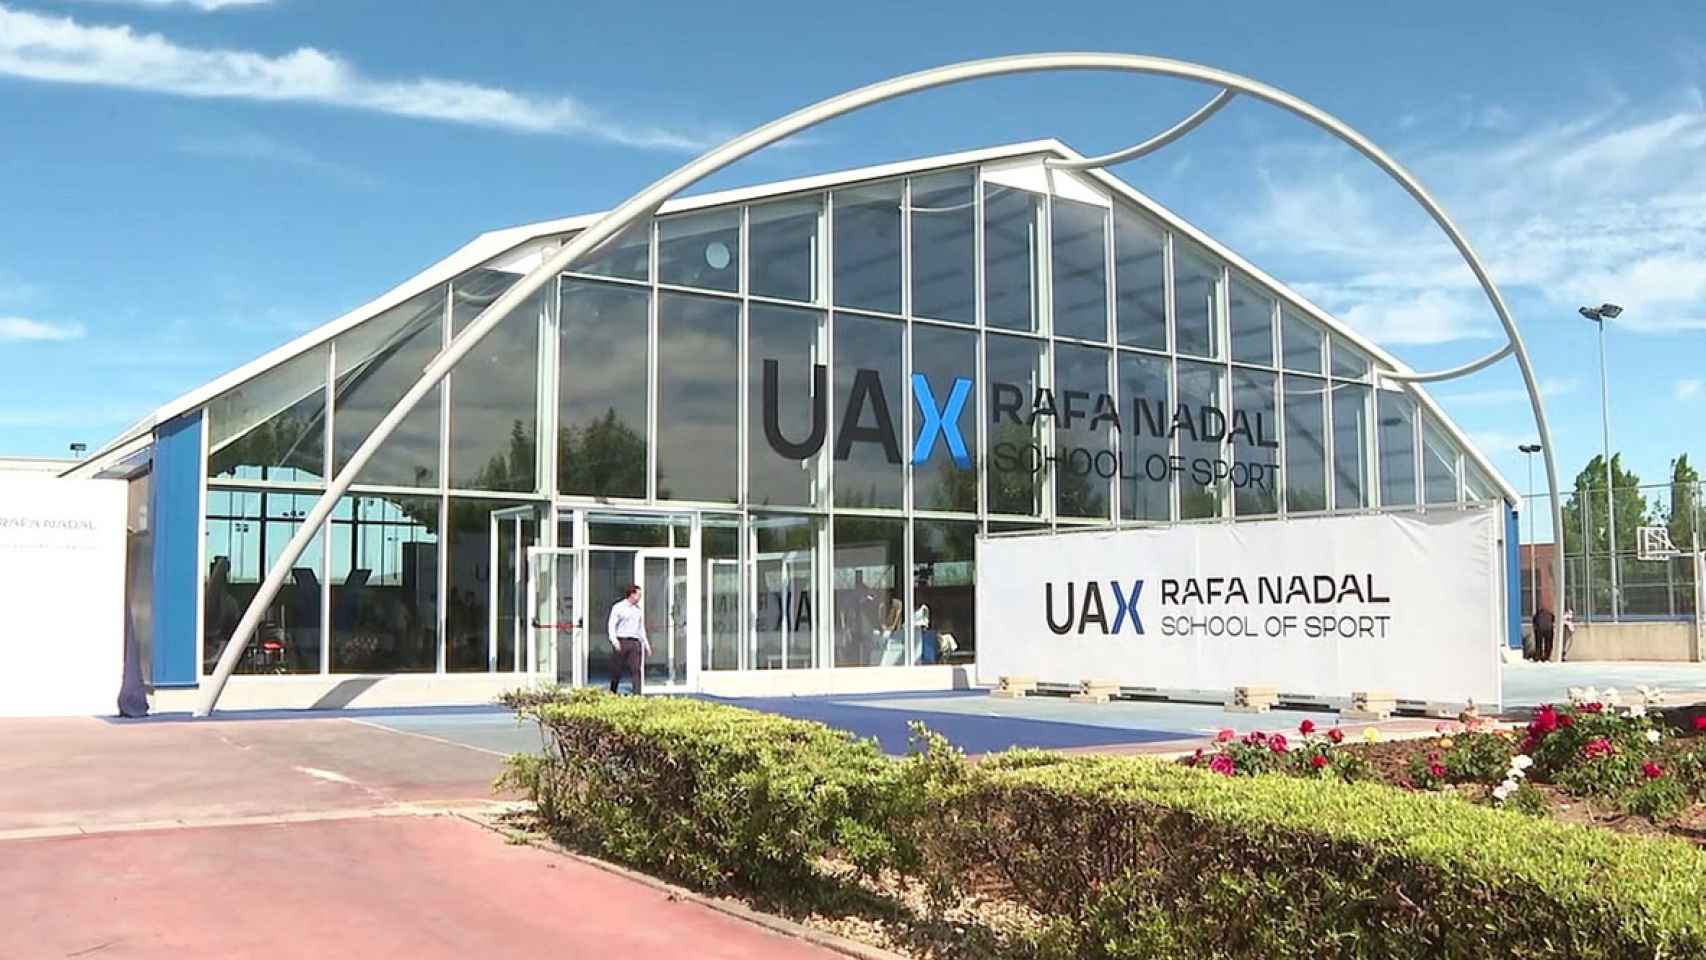 Vistazo del polideportivo inaugurado por UAX Rafa Nadal School of Sport